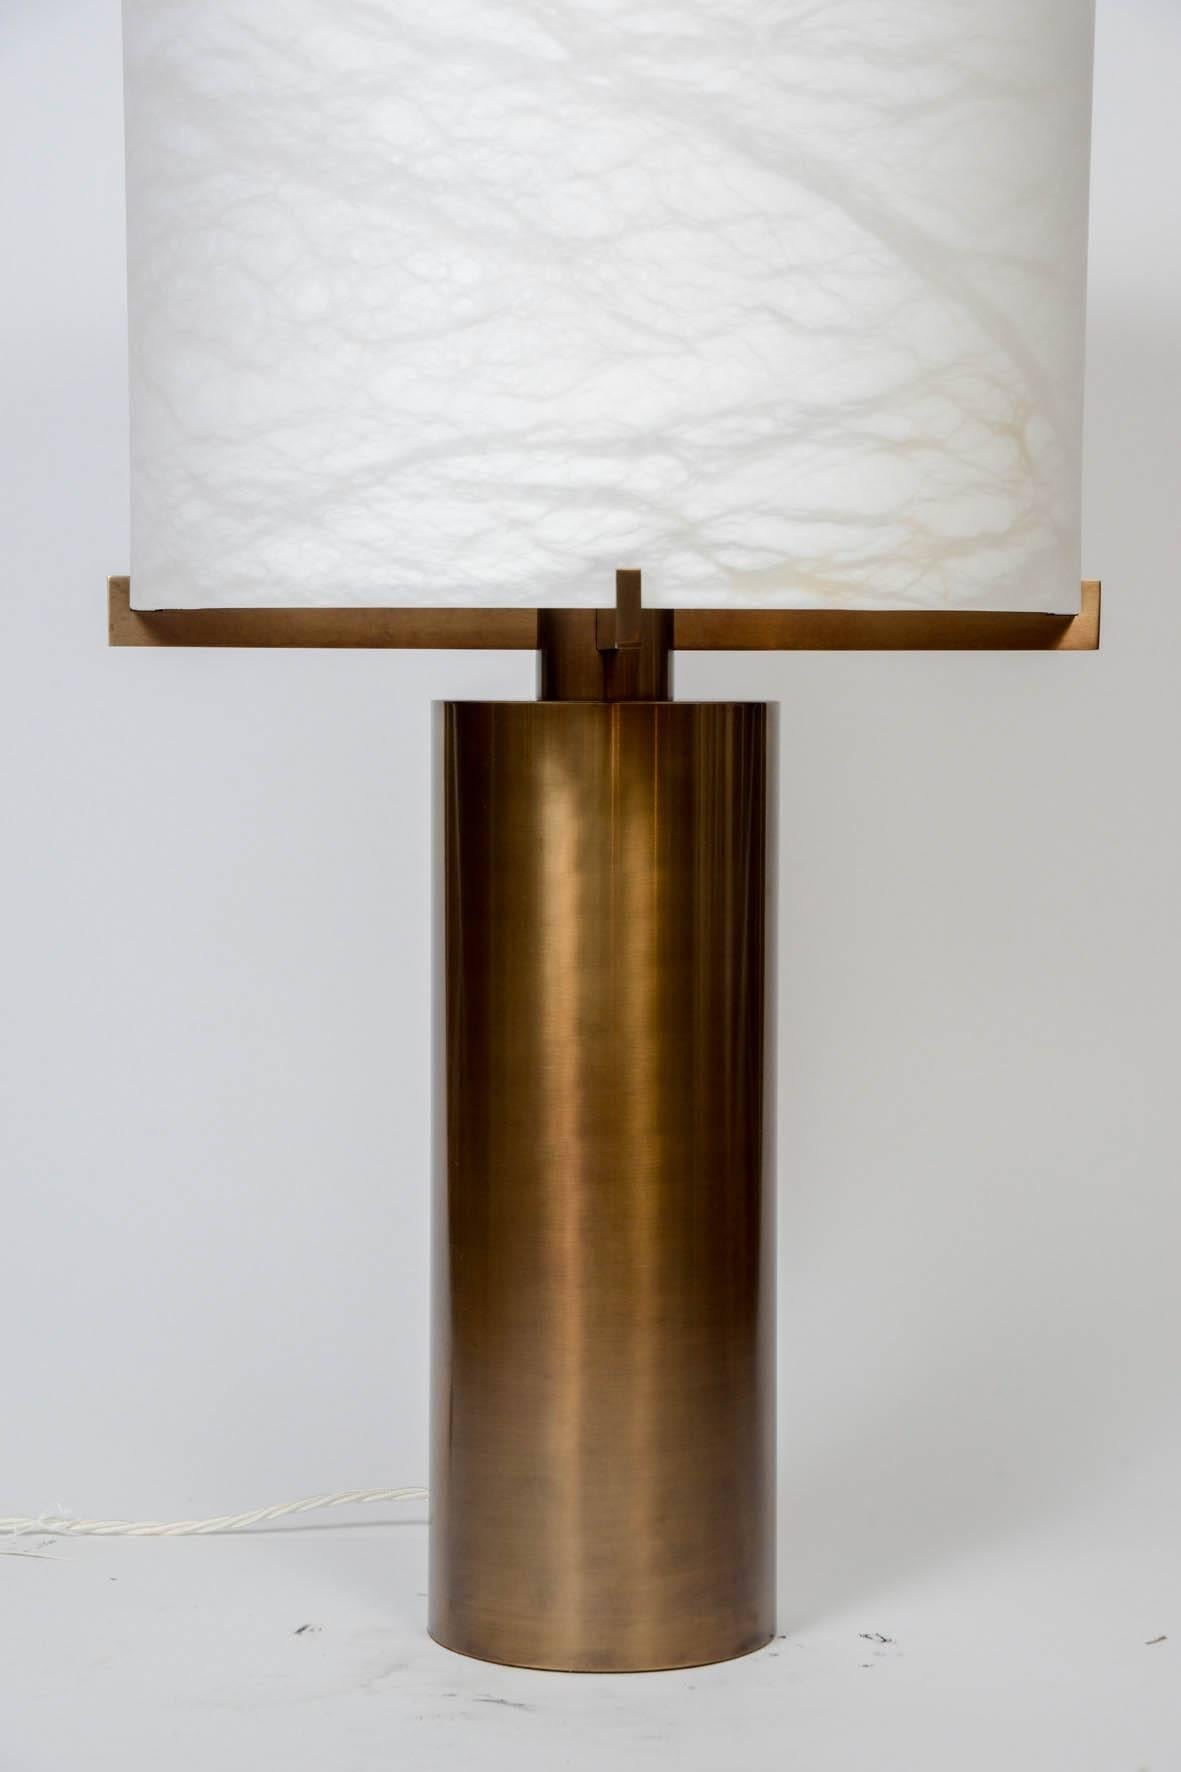 Glustin Luminaires design, cylindrical brass lamp holding an impressive one piece alabaster round shade.